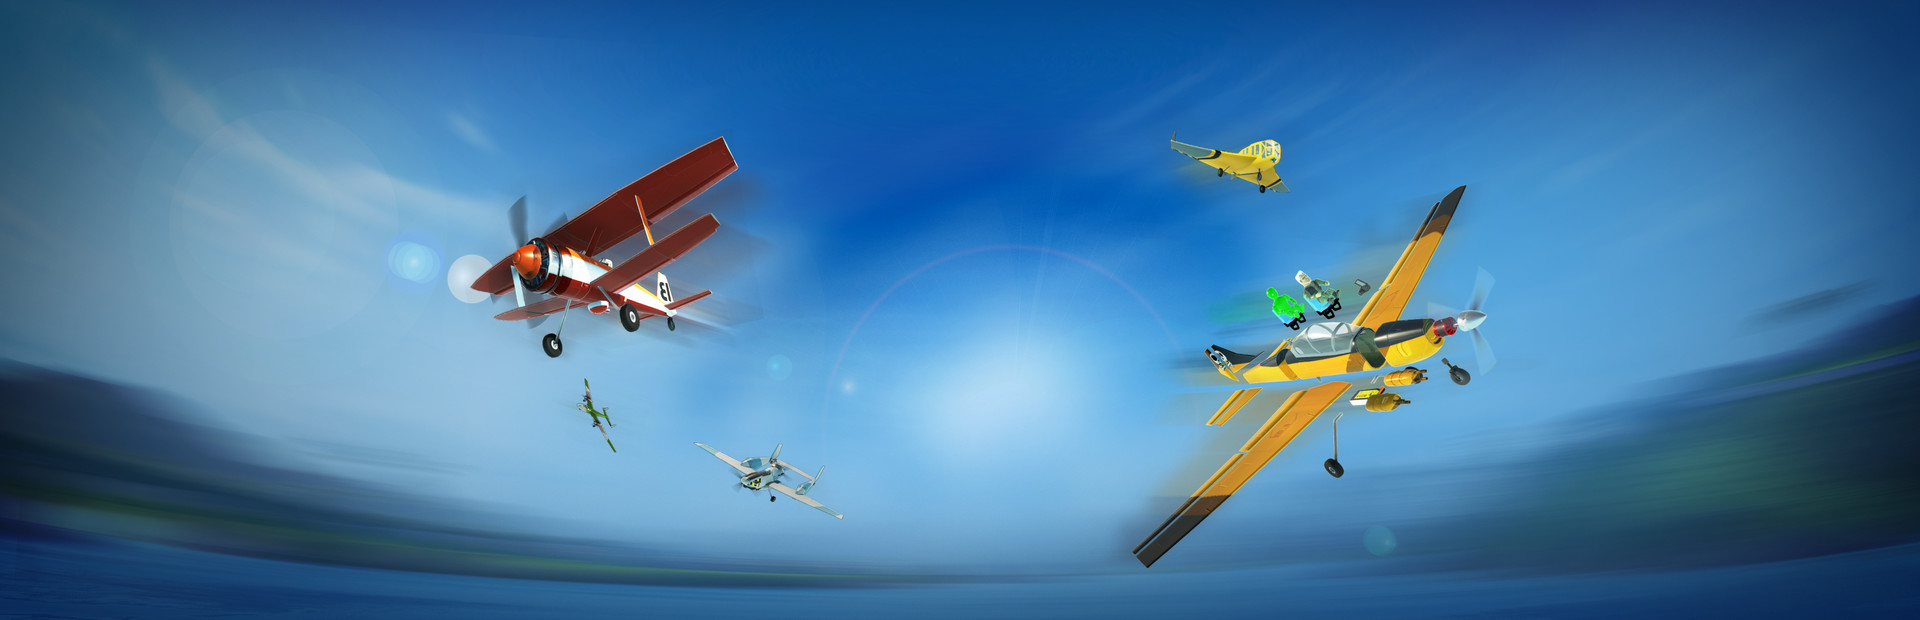 Balsa Model Flight Simulator cover image